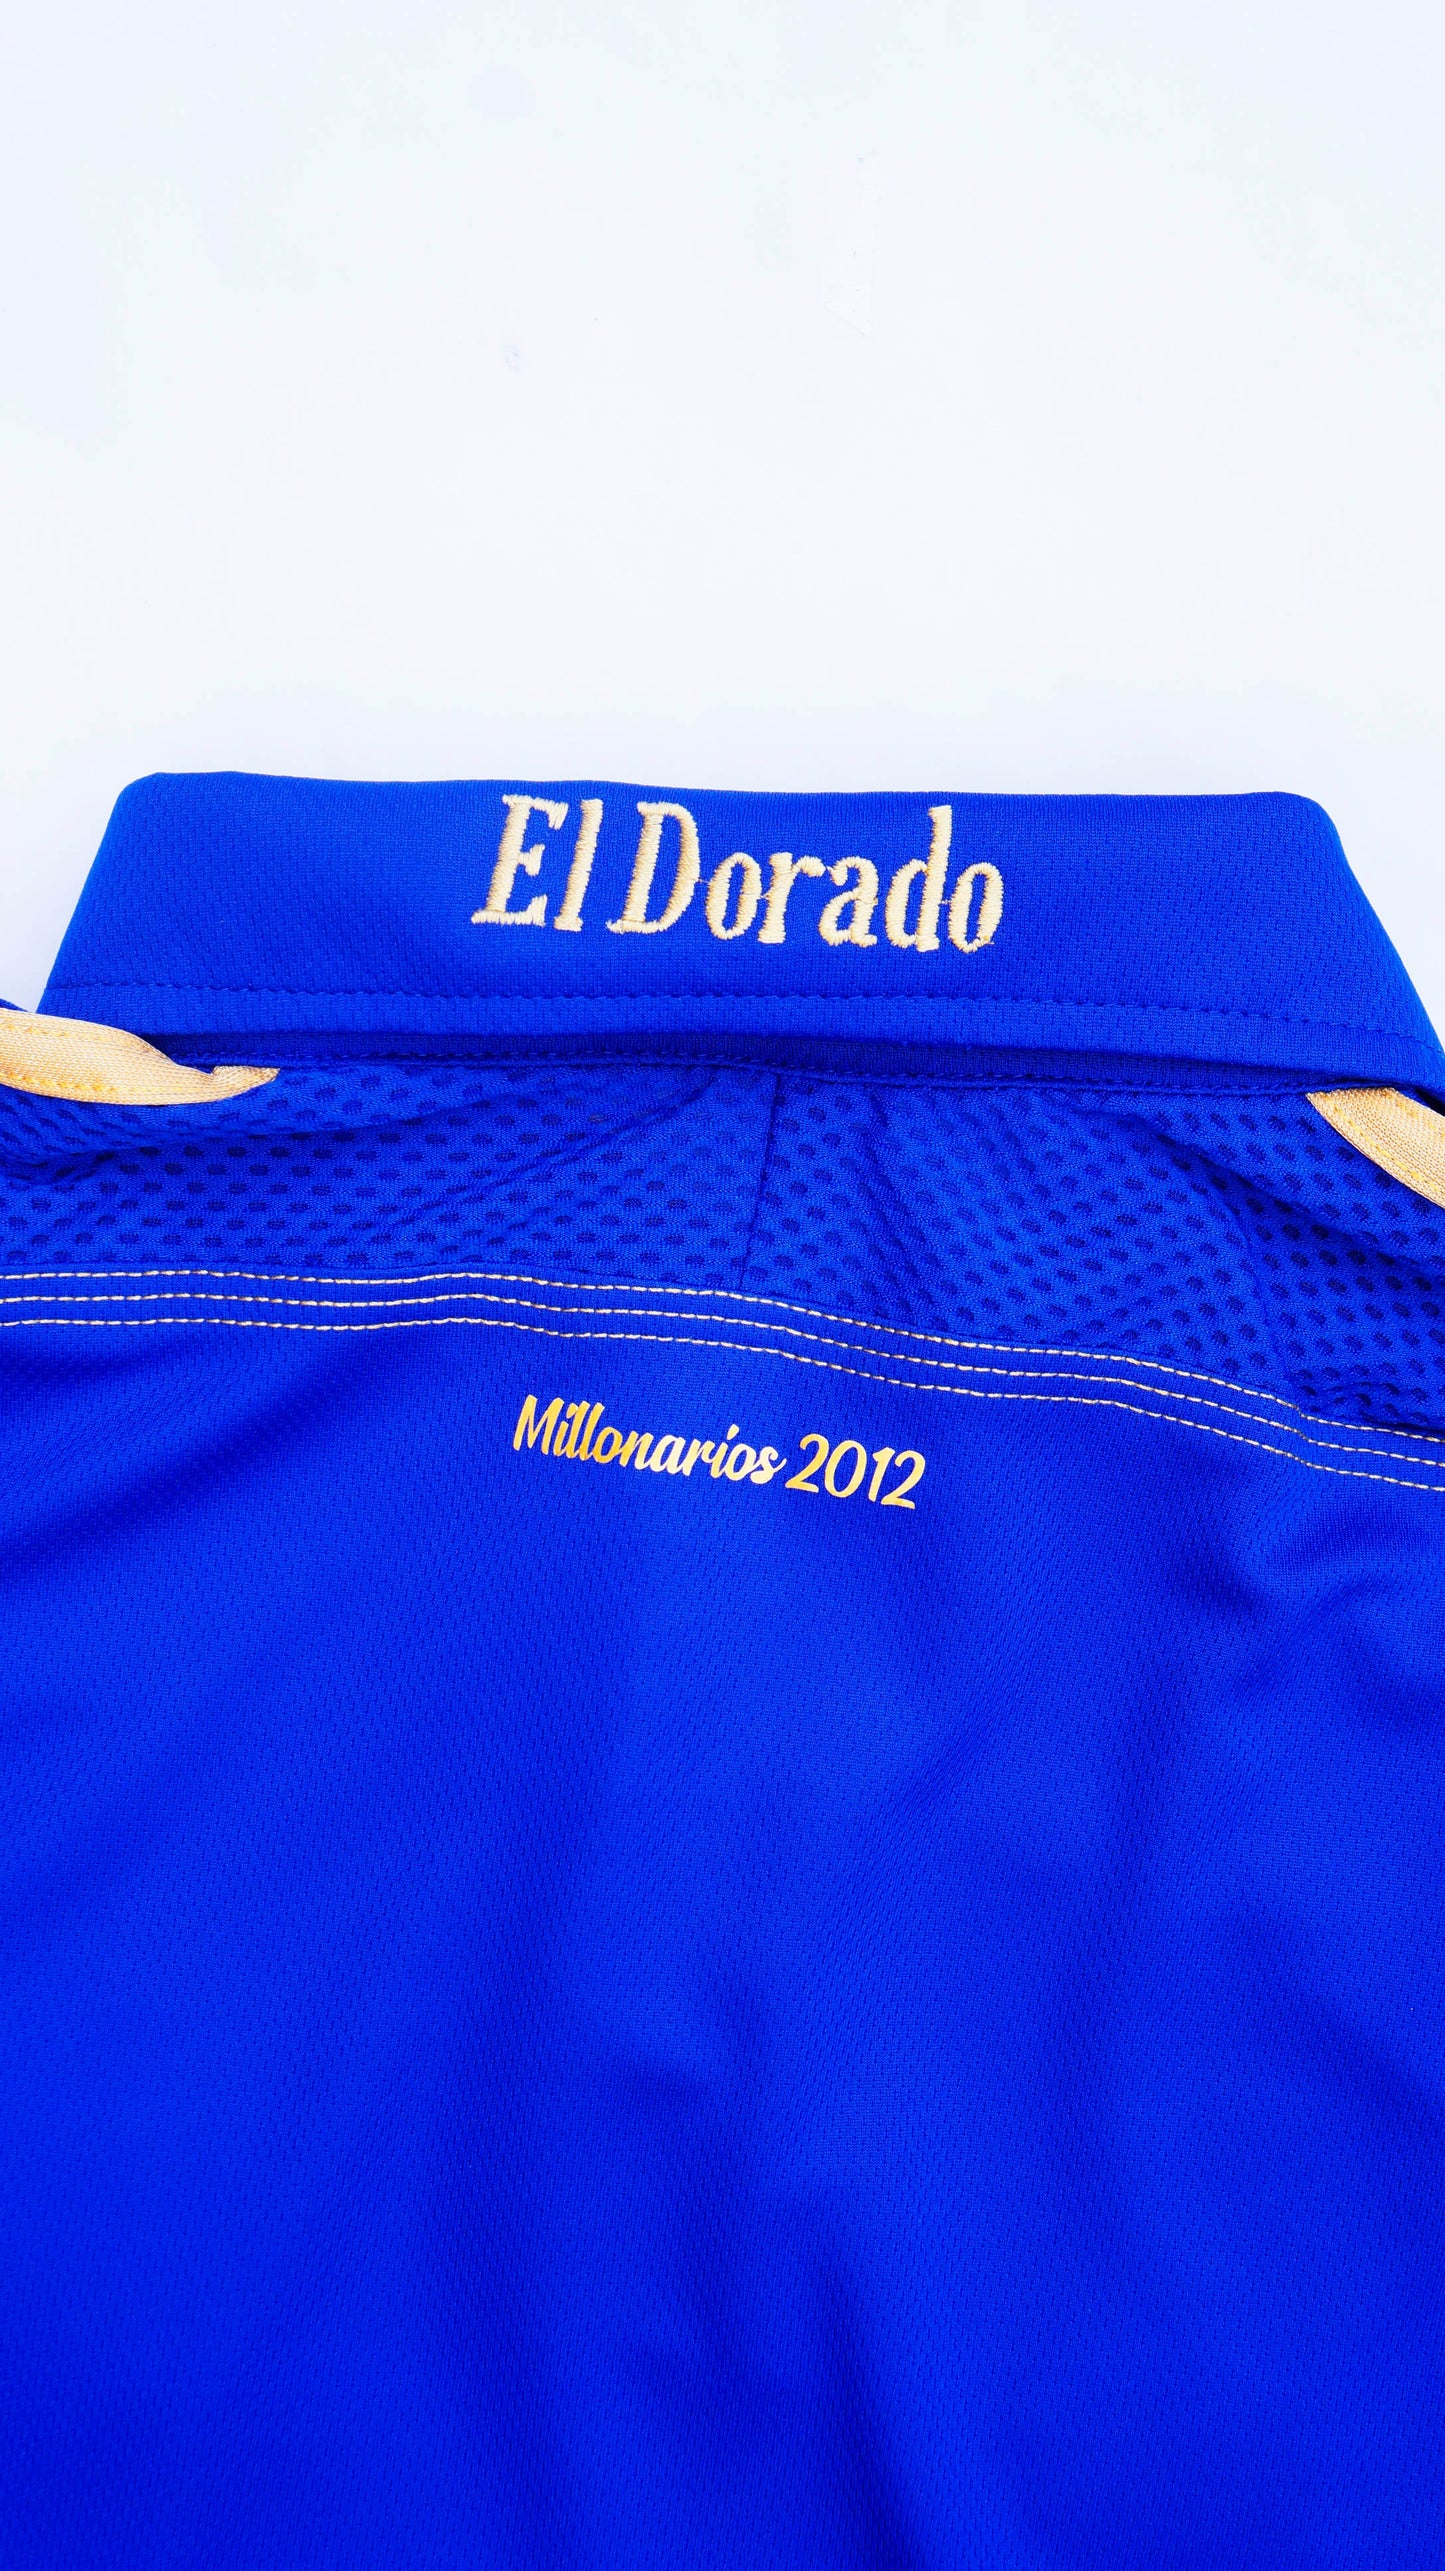 Millionaire El Dorado 2011 - 2012 T-shirt